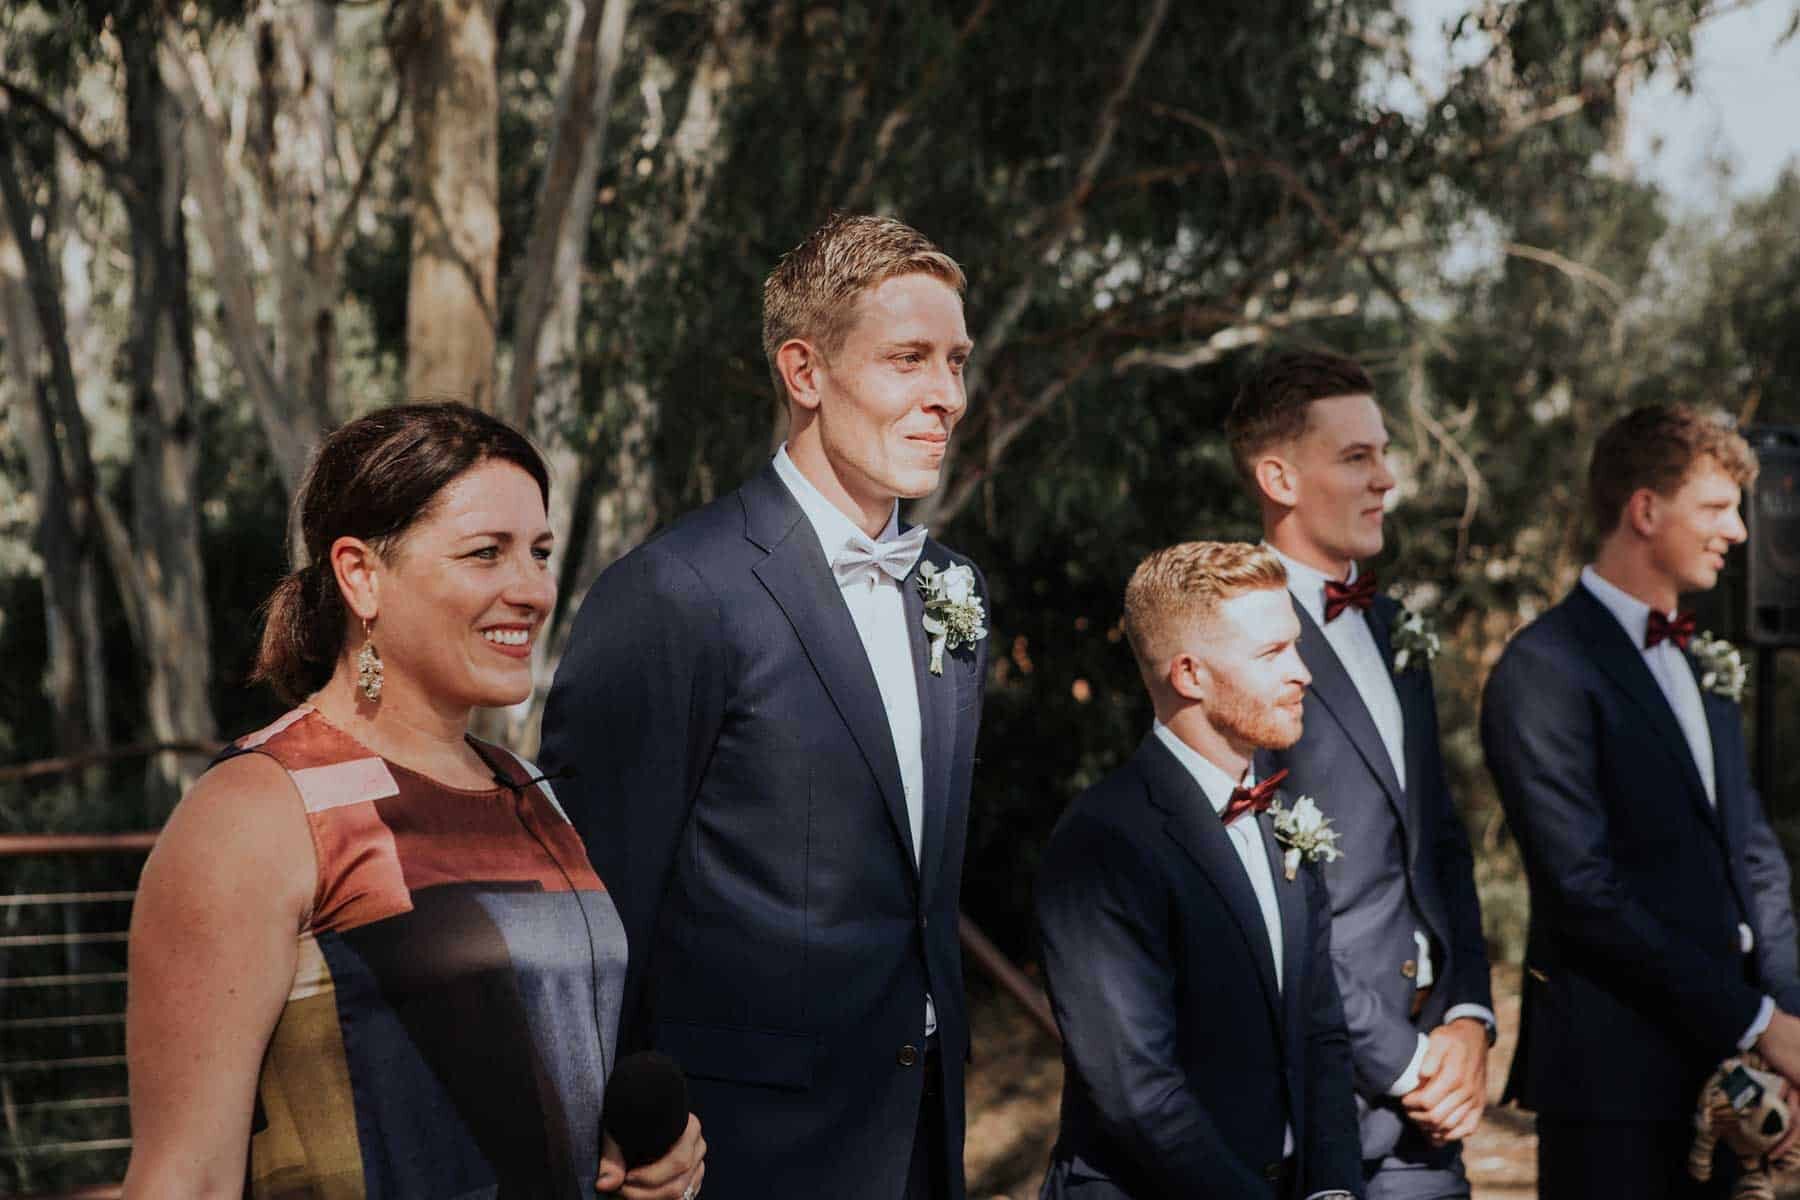 modern Melbourne marriage celebrant